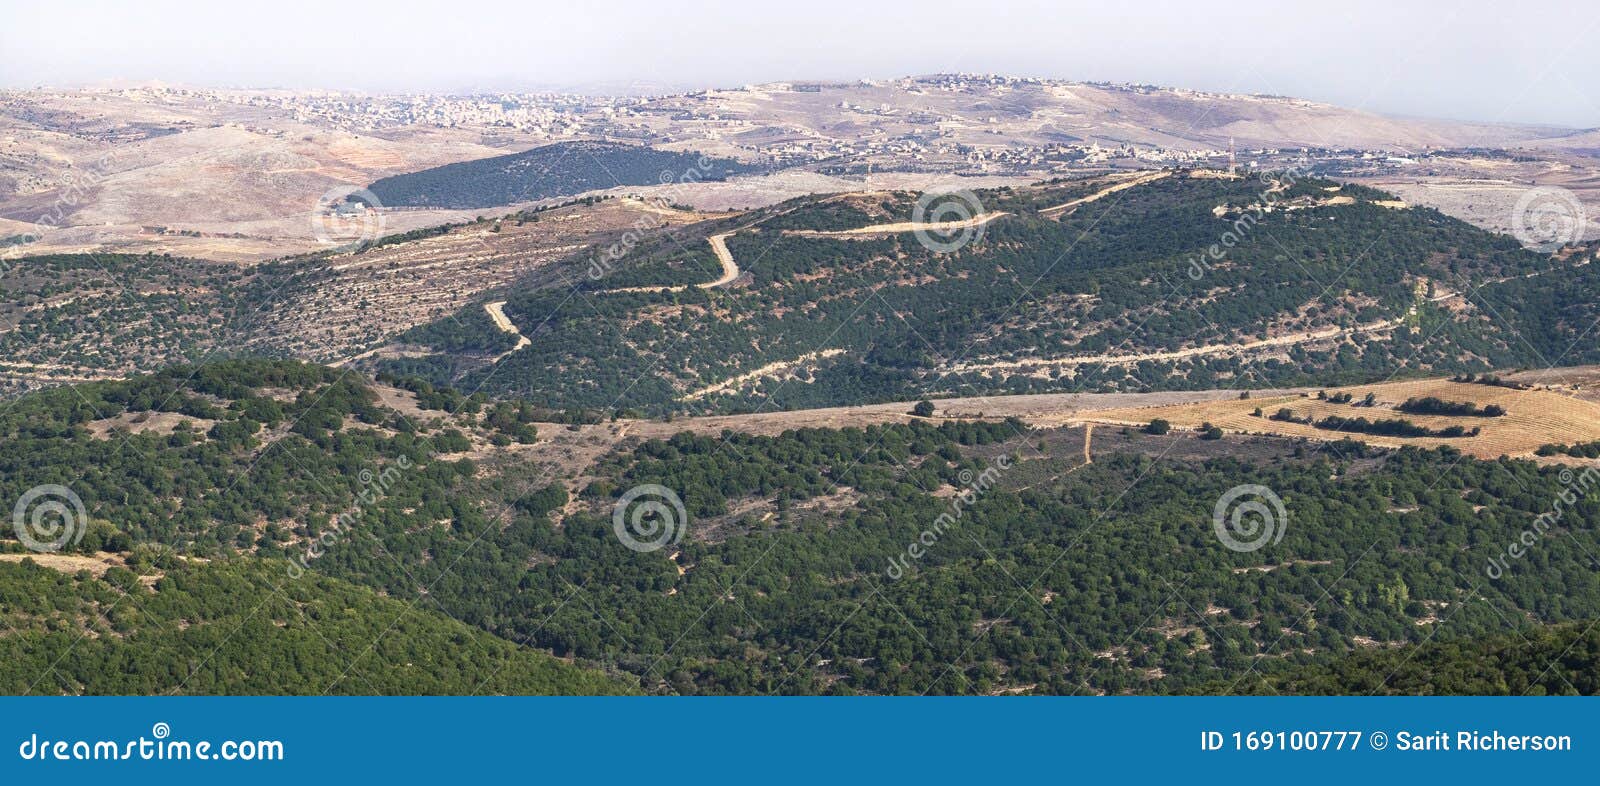 border between lebanon and israel from adir mountain in israel